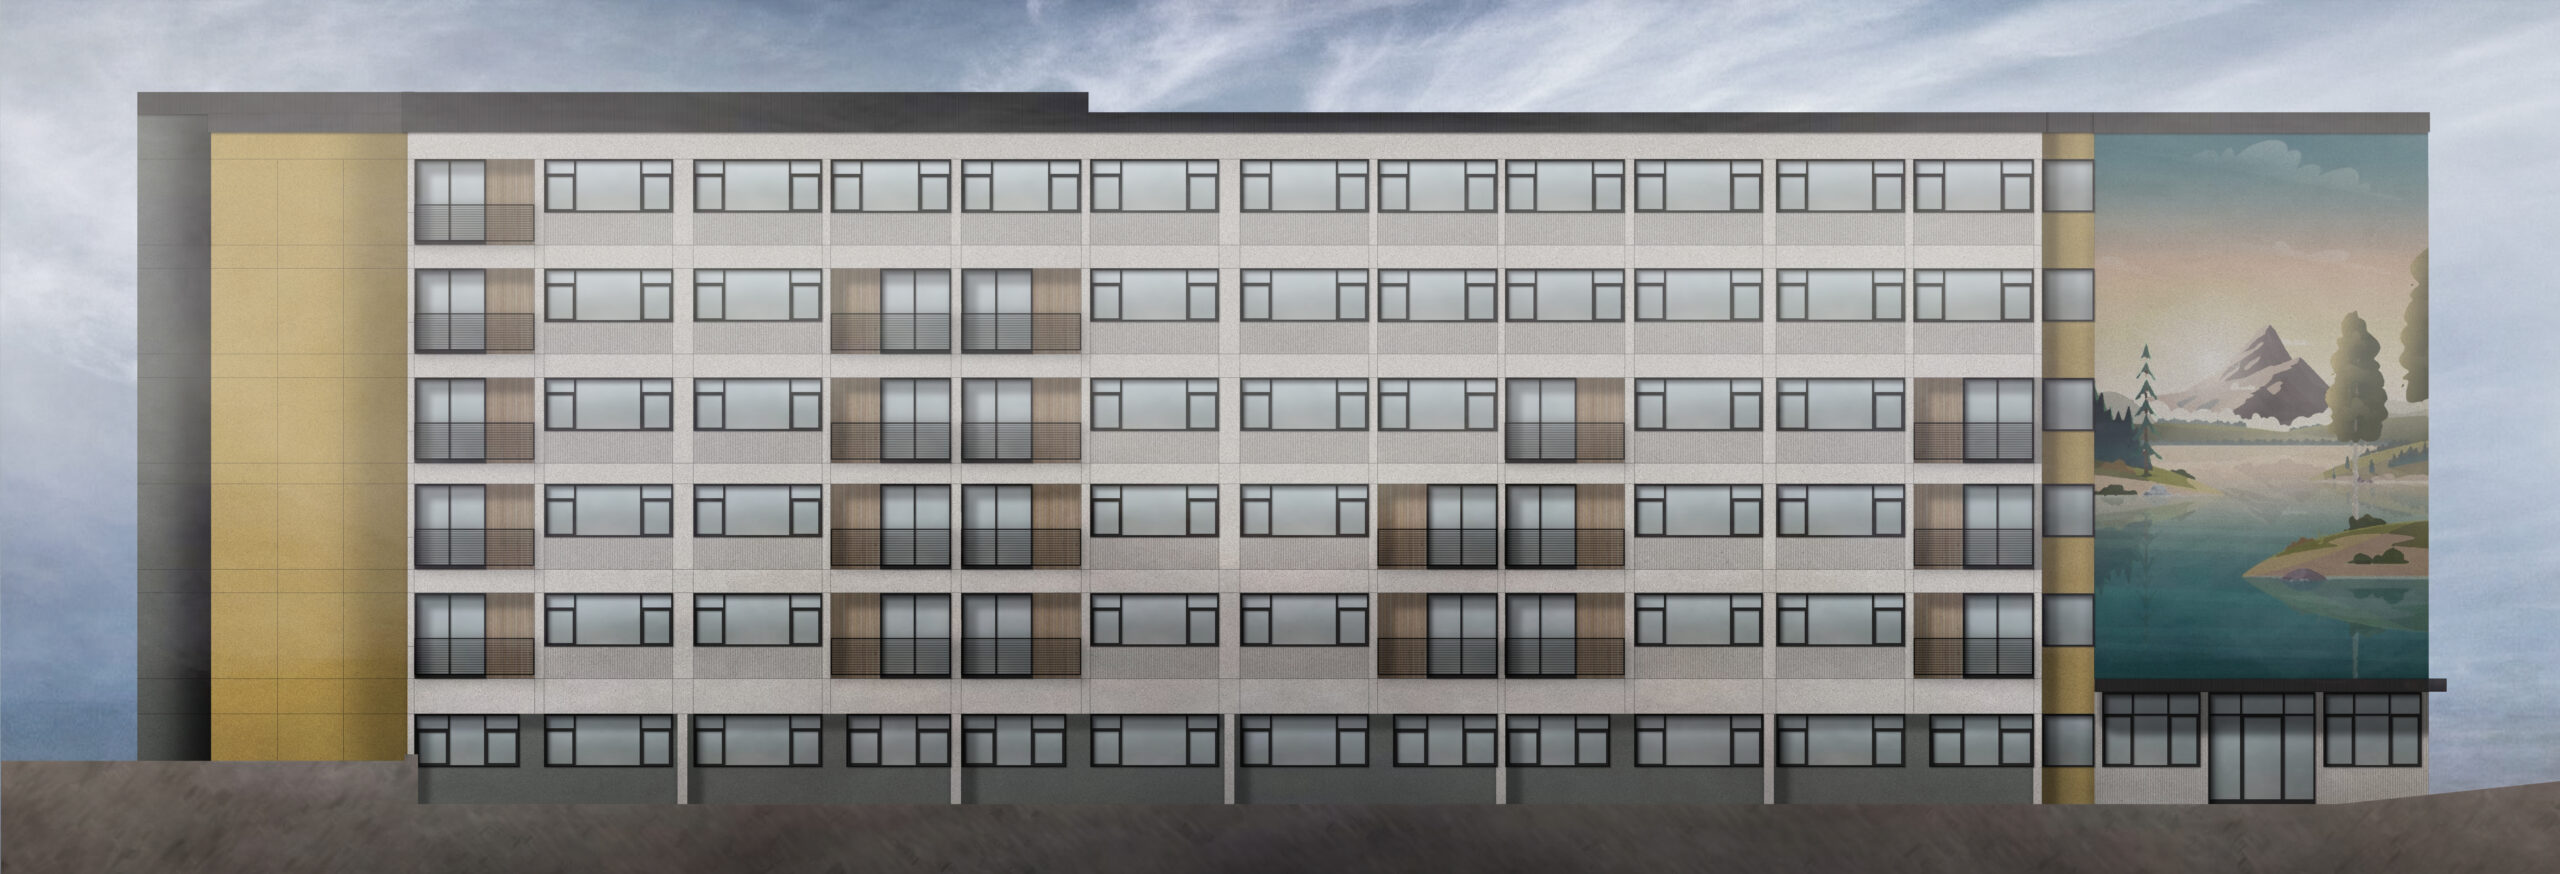 facade design concept for a multi-story housing building